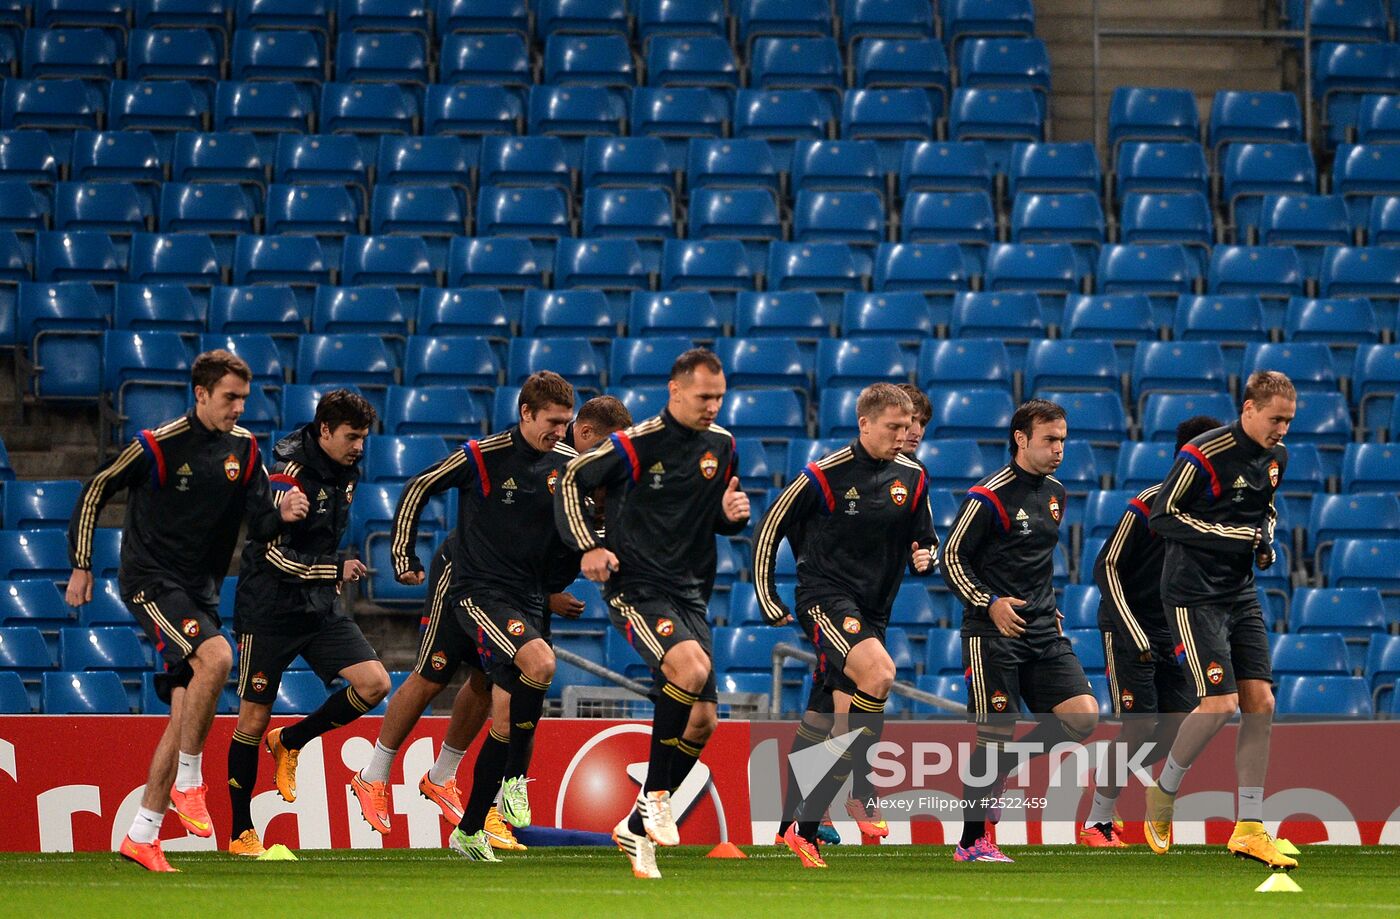 UEFA Champions League. FC CSKA holds training session